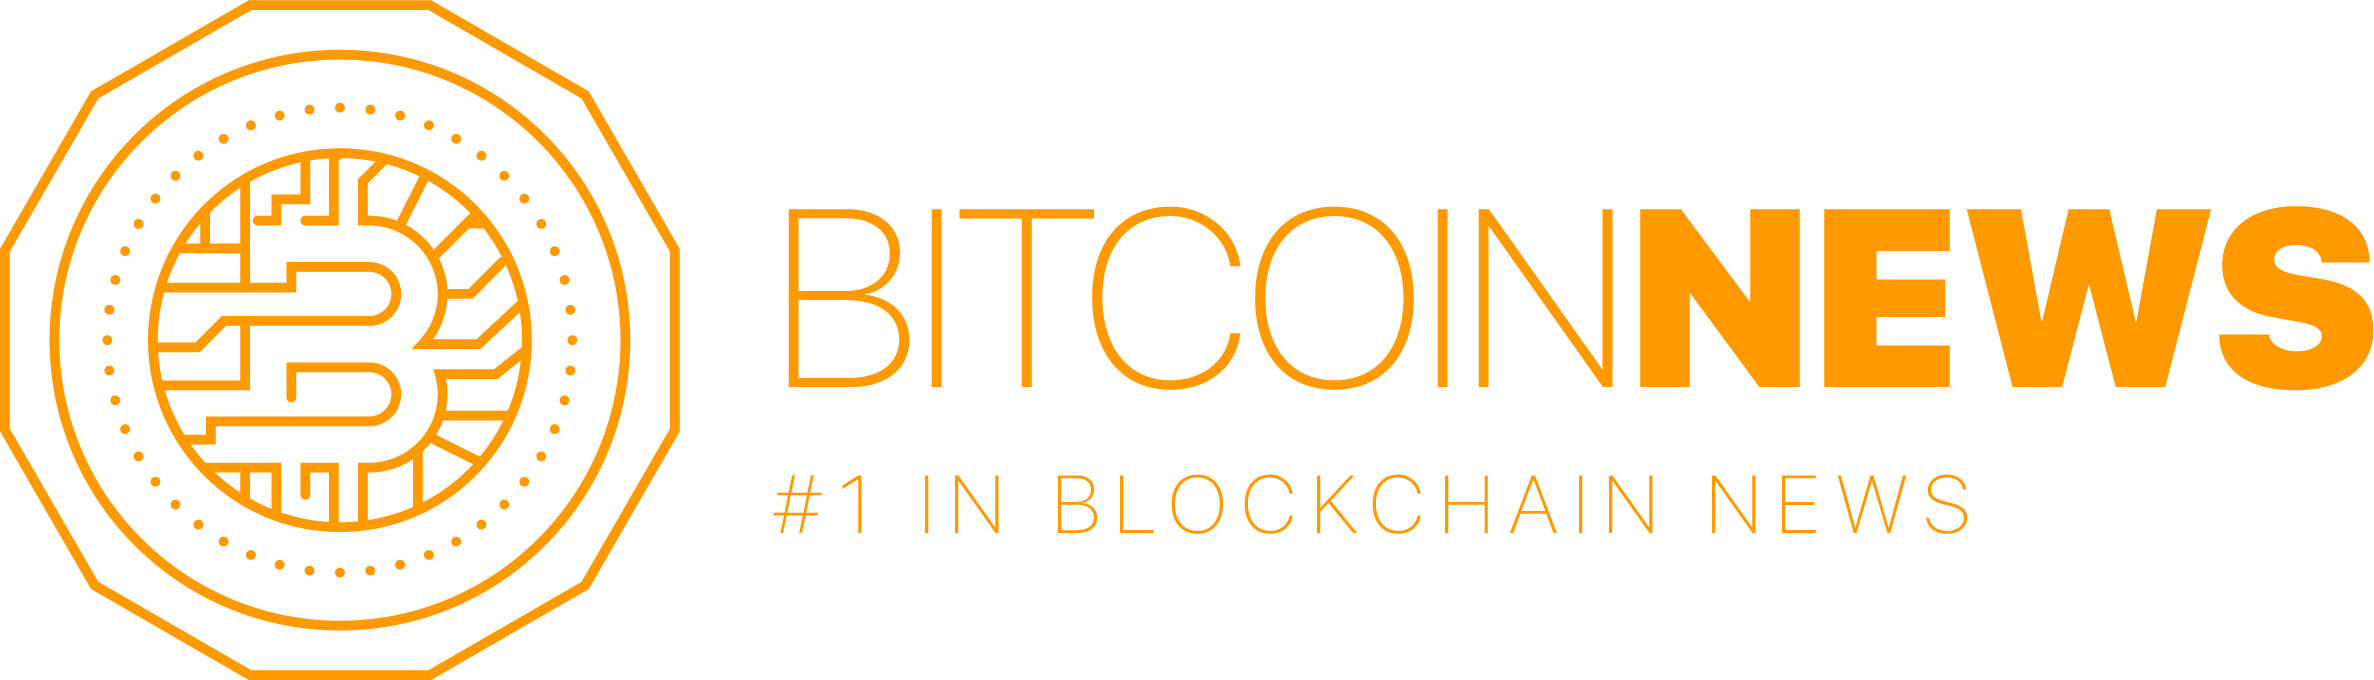 Blockchain News Logo - BitcoinNews.com - #1 in Blockchain, Fintech & Bitcoin News